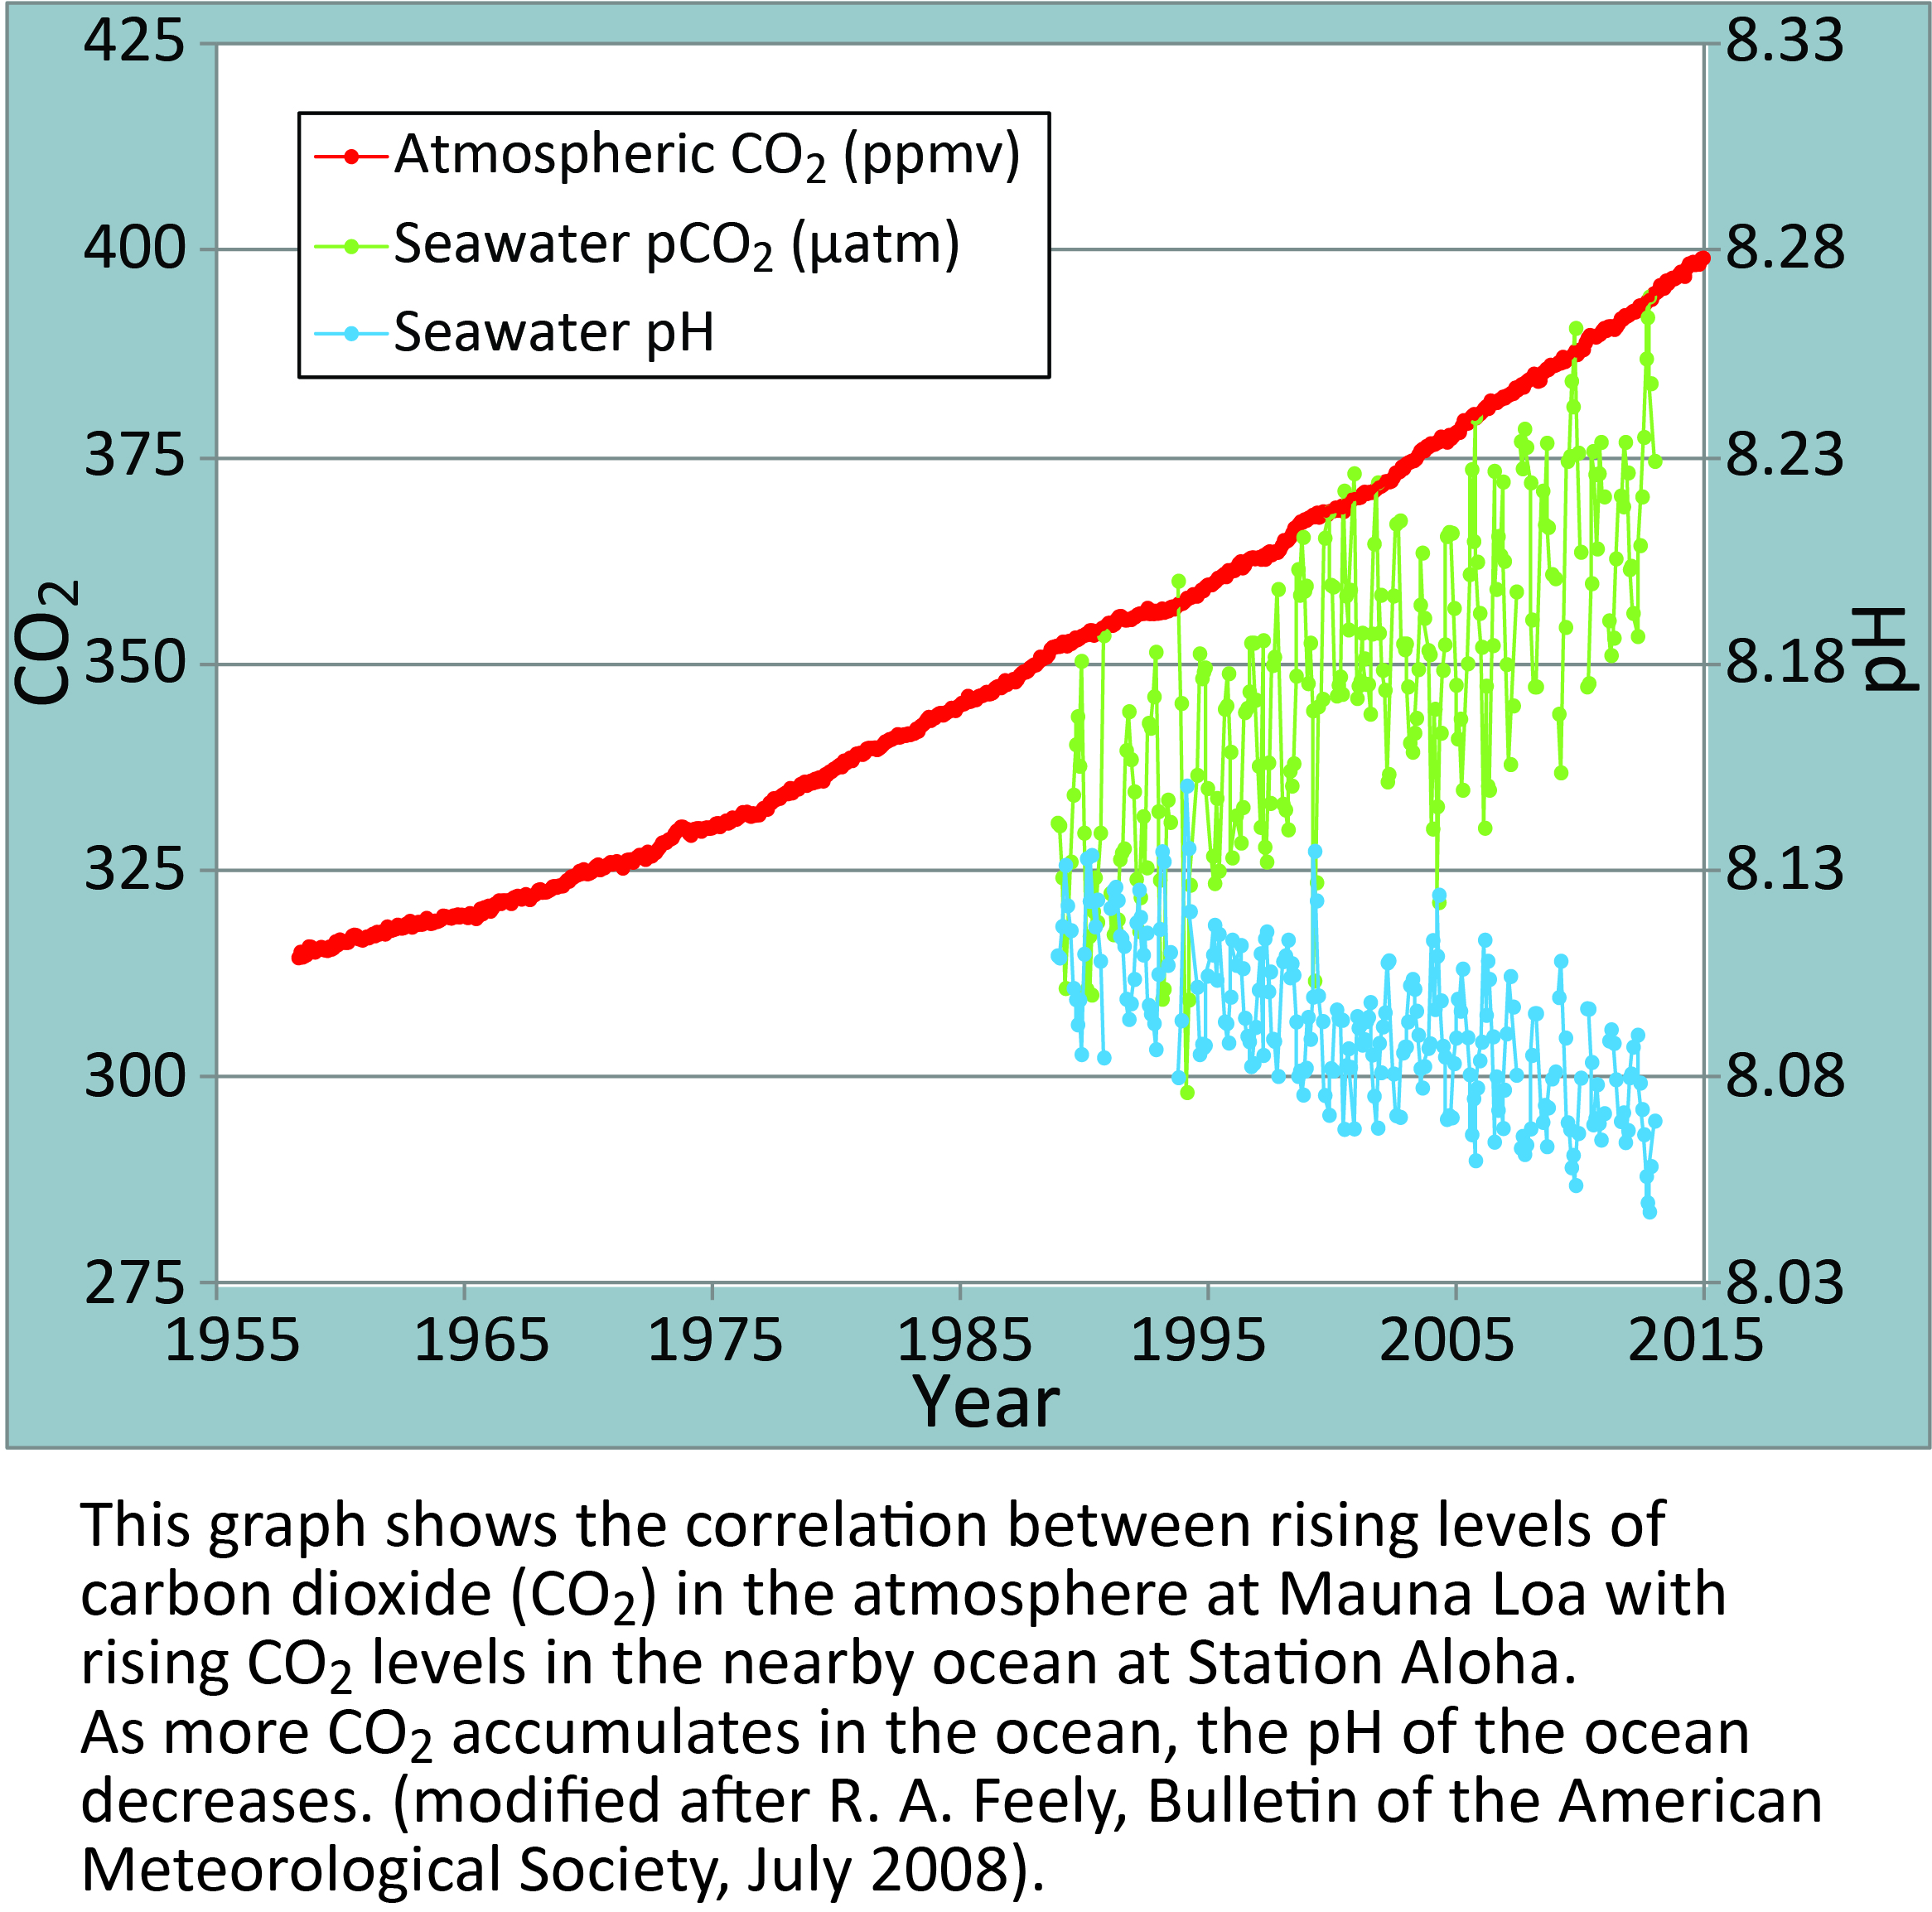 Seawater CO2